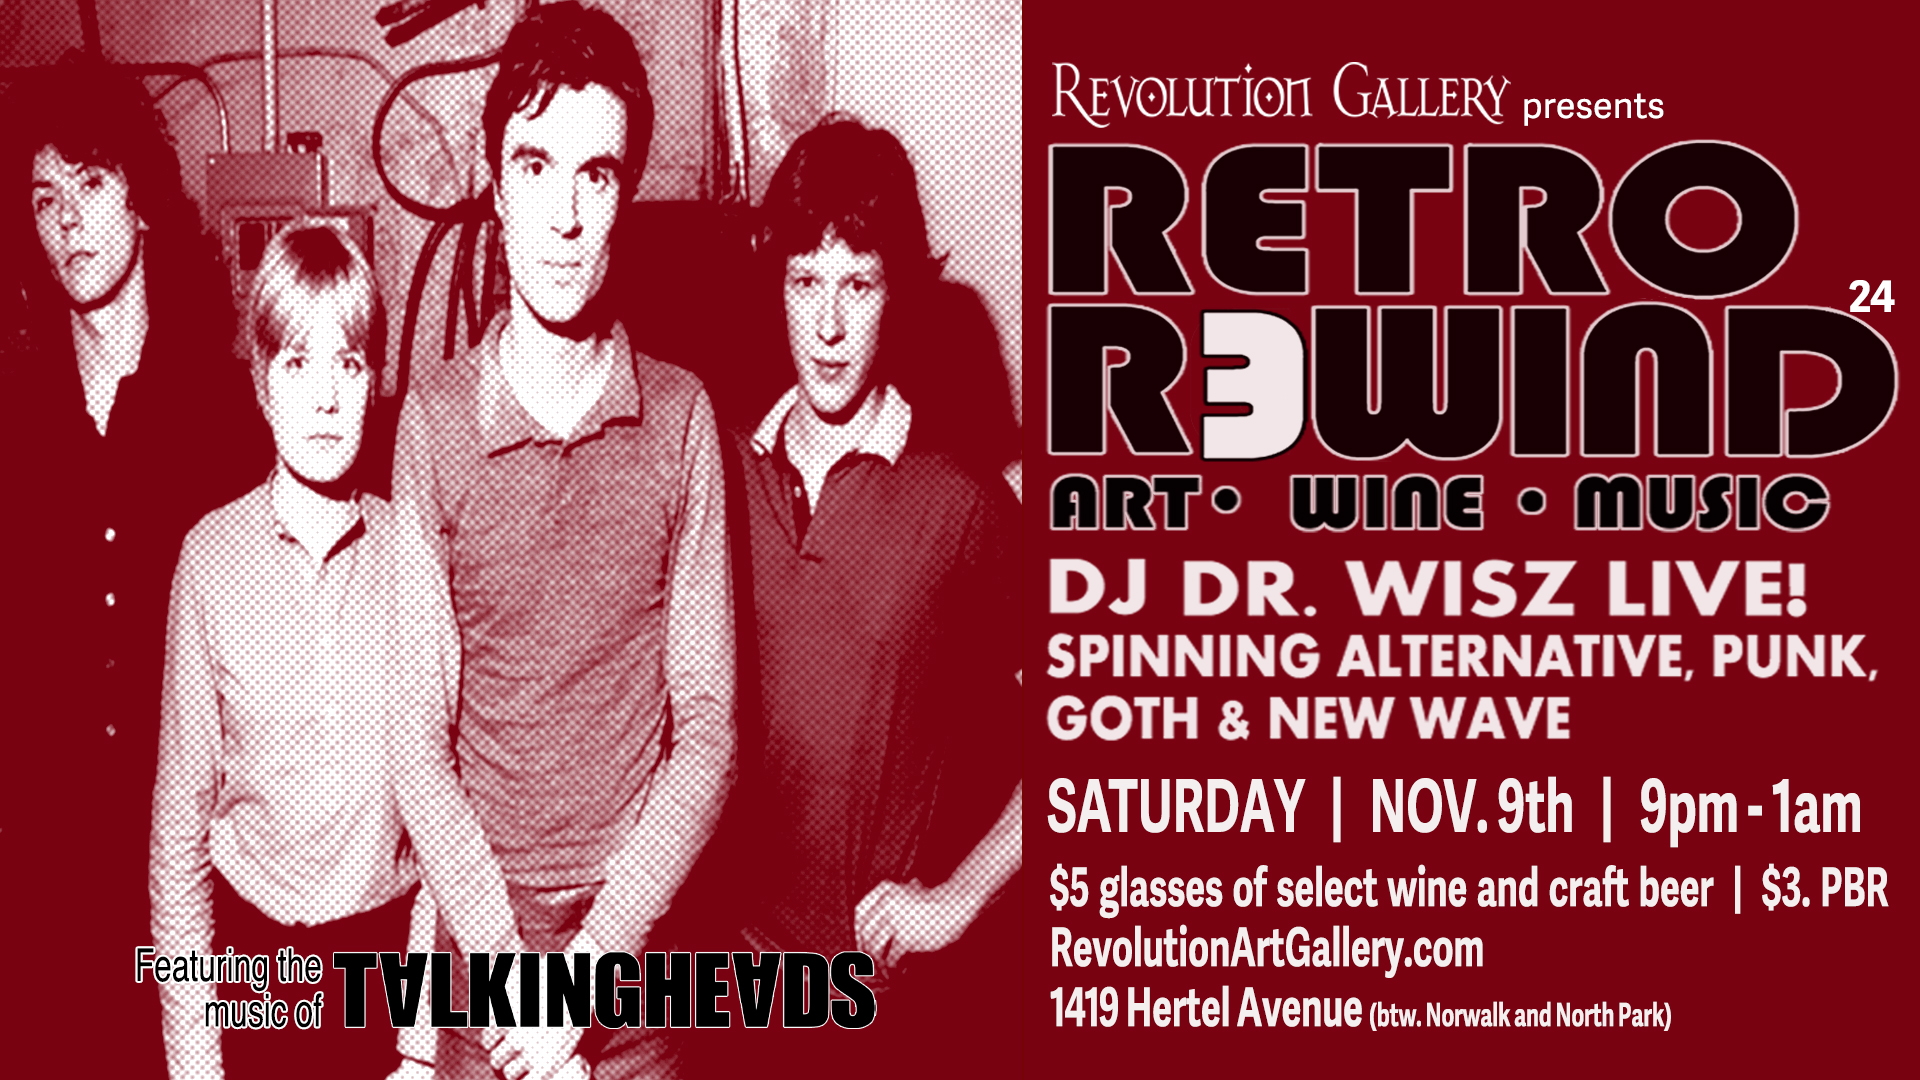 Retro Rewind 24 Revolution Gallery